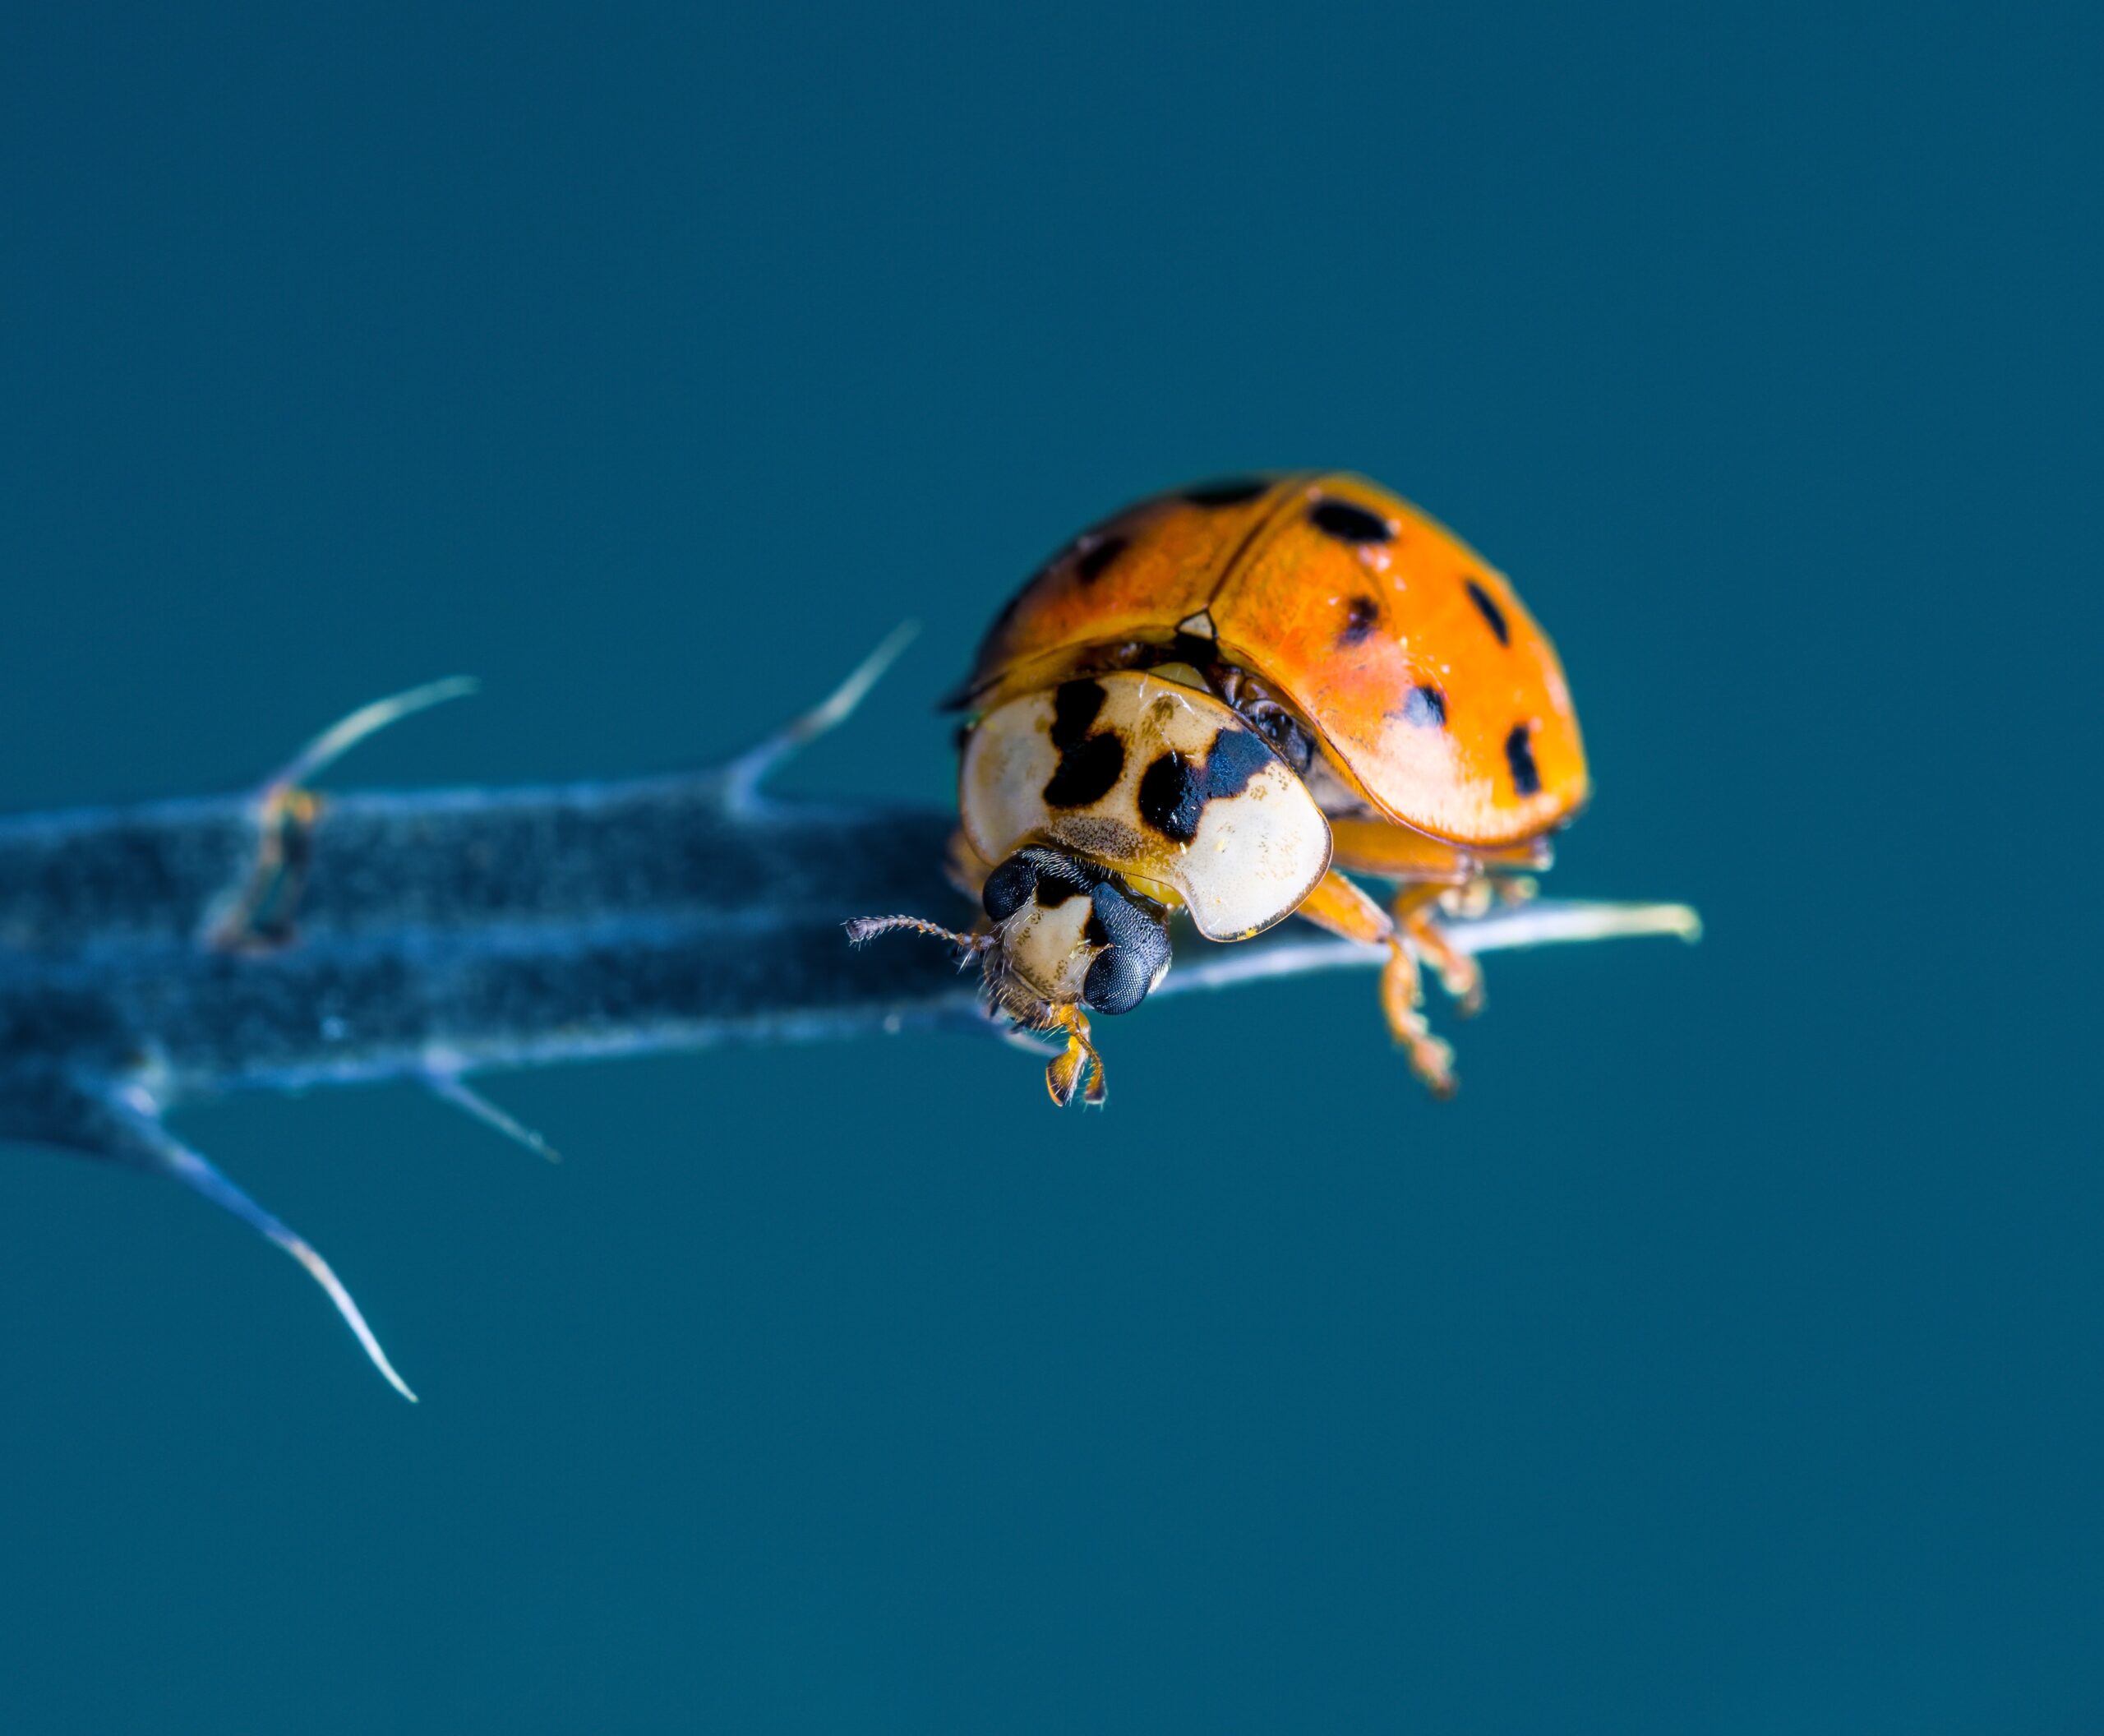 Lady beetle swamps Texas homes by Mario Villarino